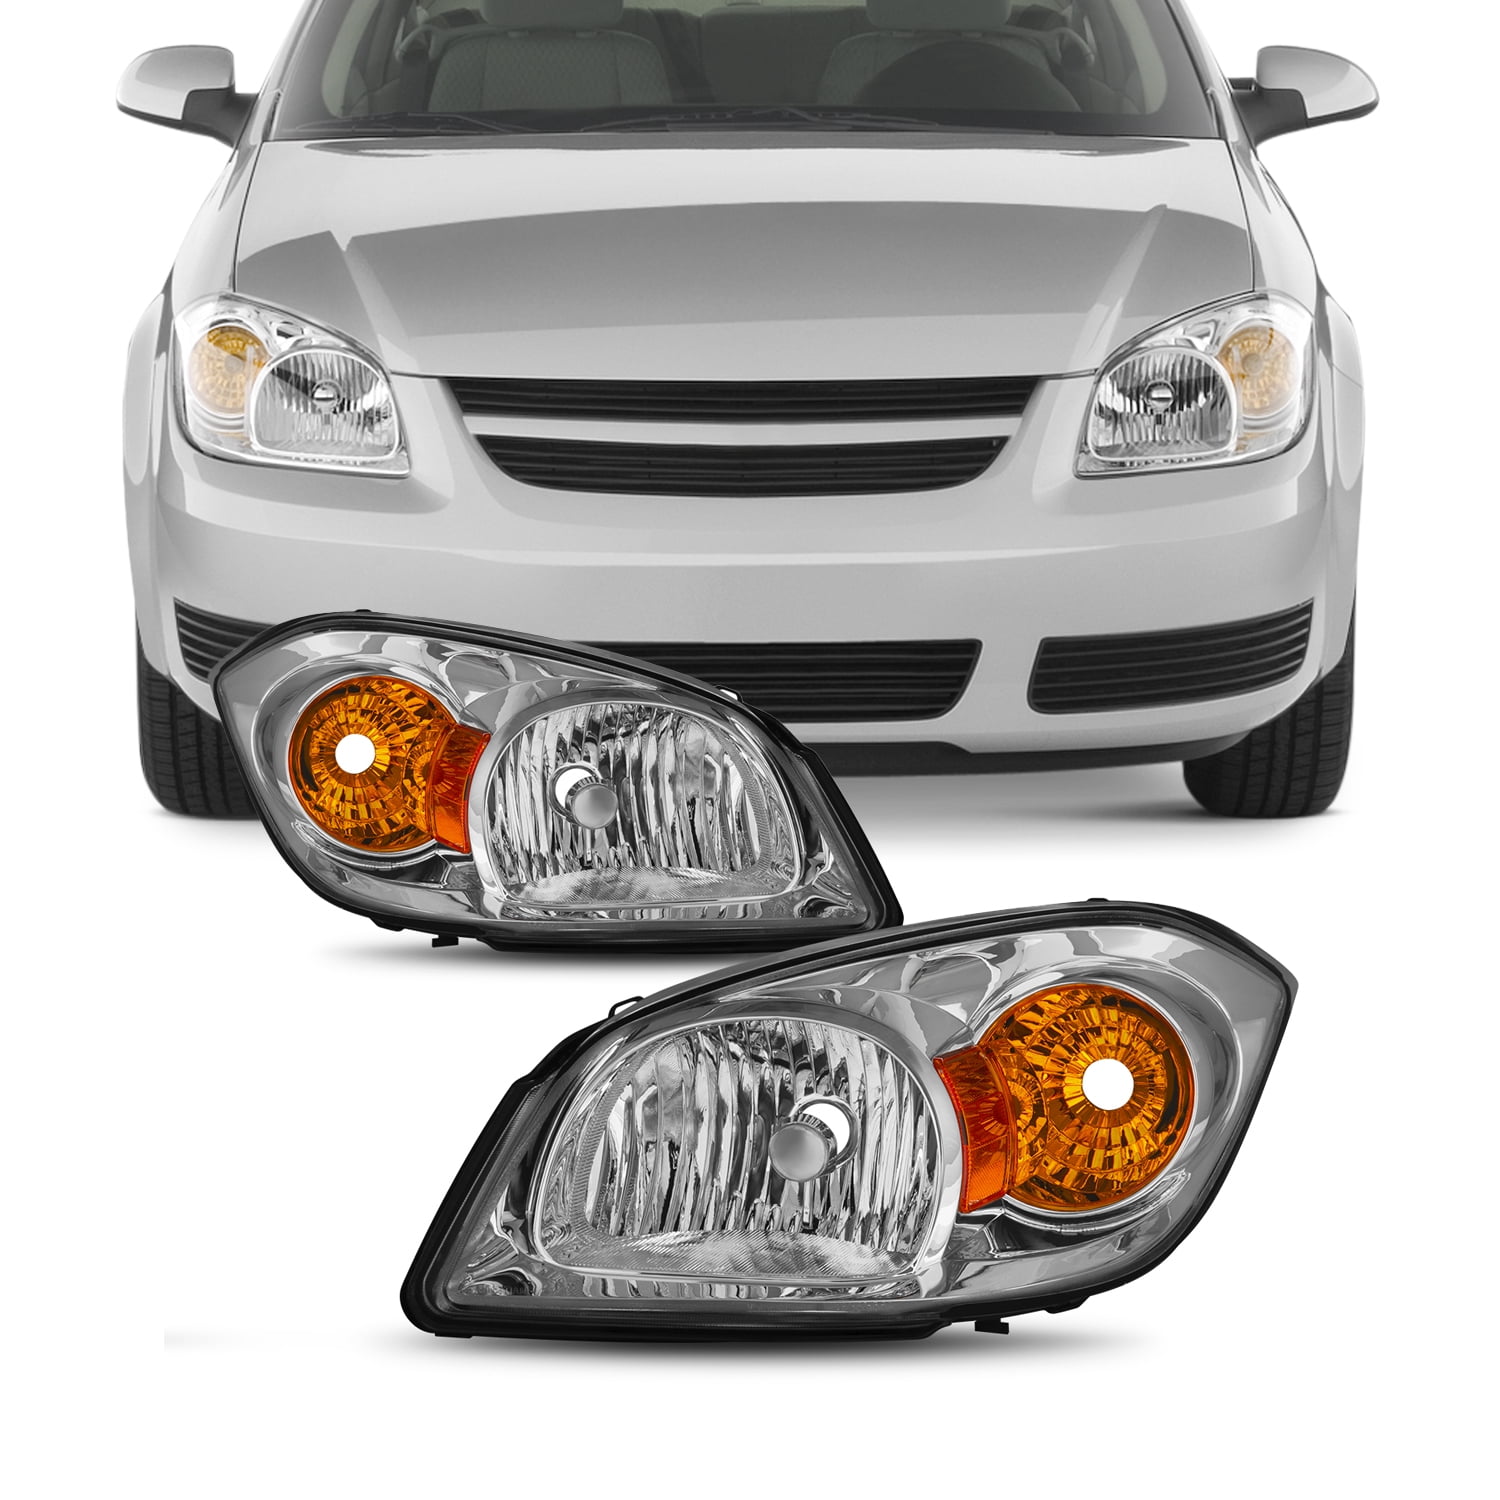 For 07-10 Pontiac G5 05-10 Chevy Cobalt 05-06 Pontiac Pursuit Headlights Front Lamps Replacement Pair 